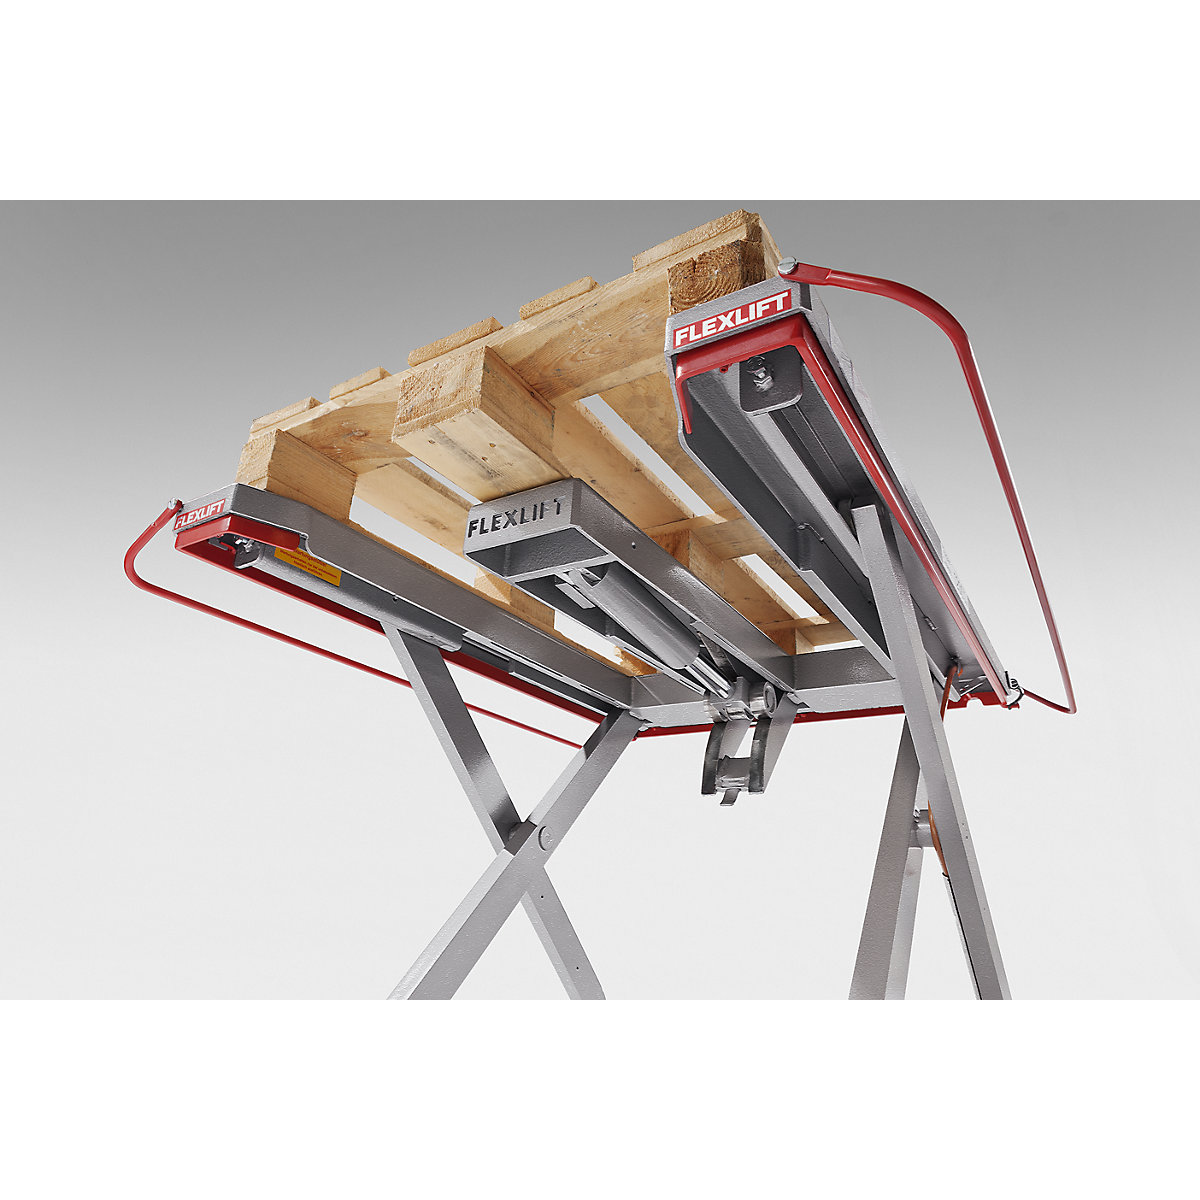 Low profile lift table, E series – Flexlift (Product illustration 3)